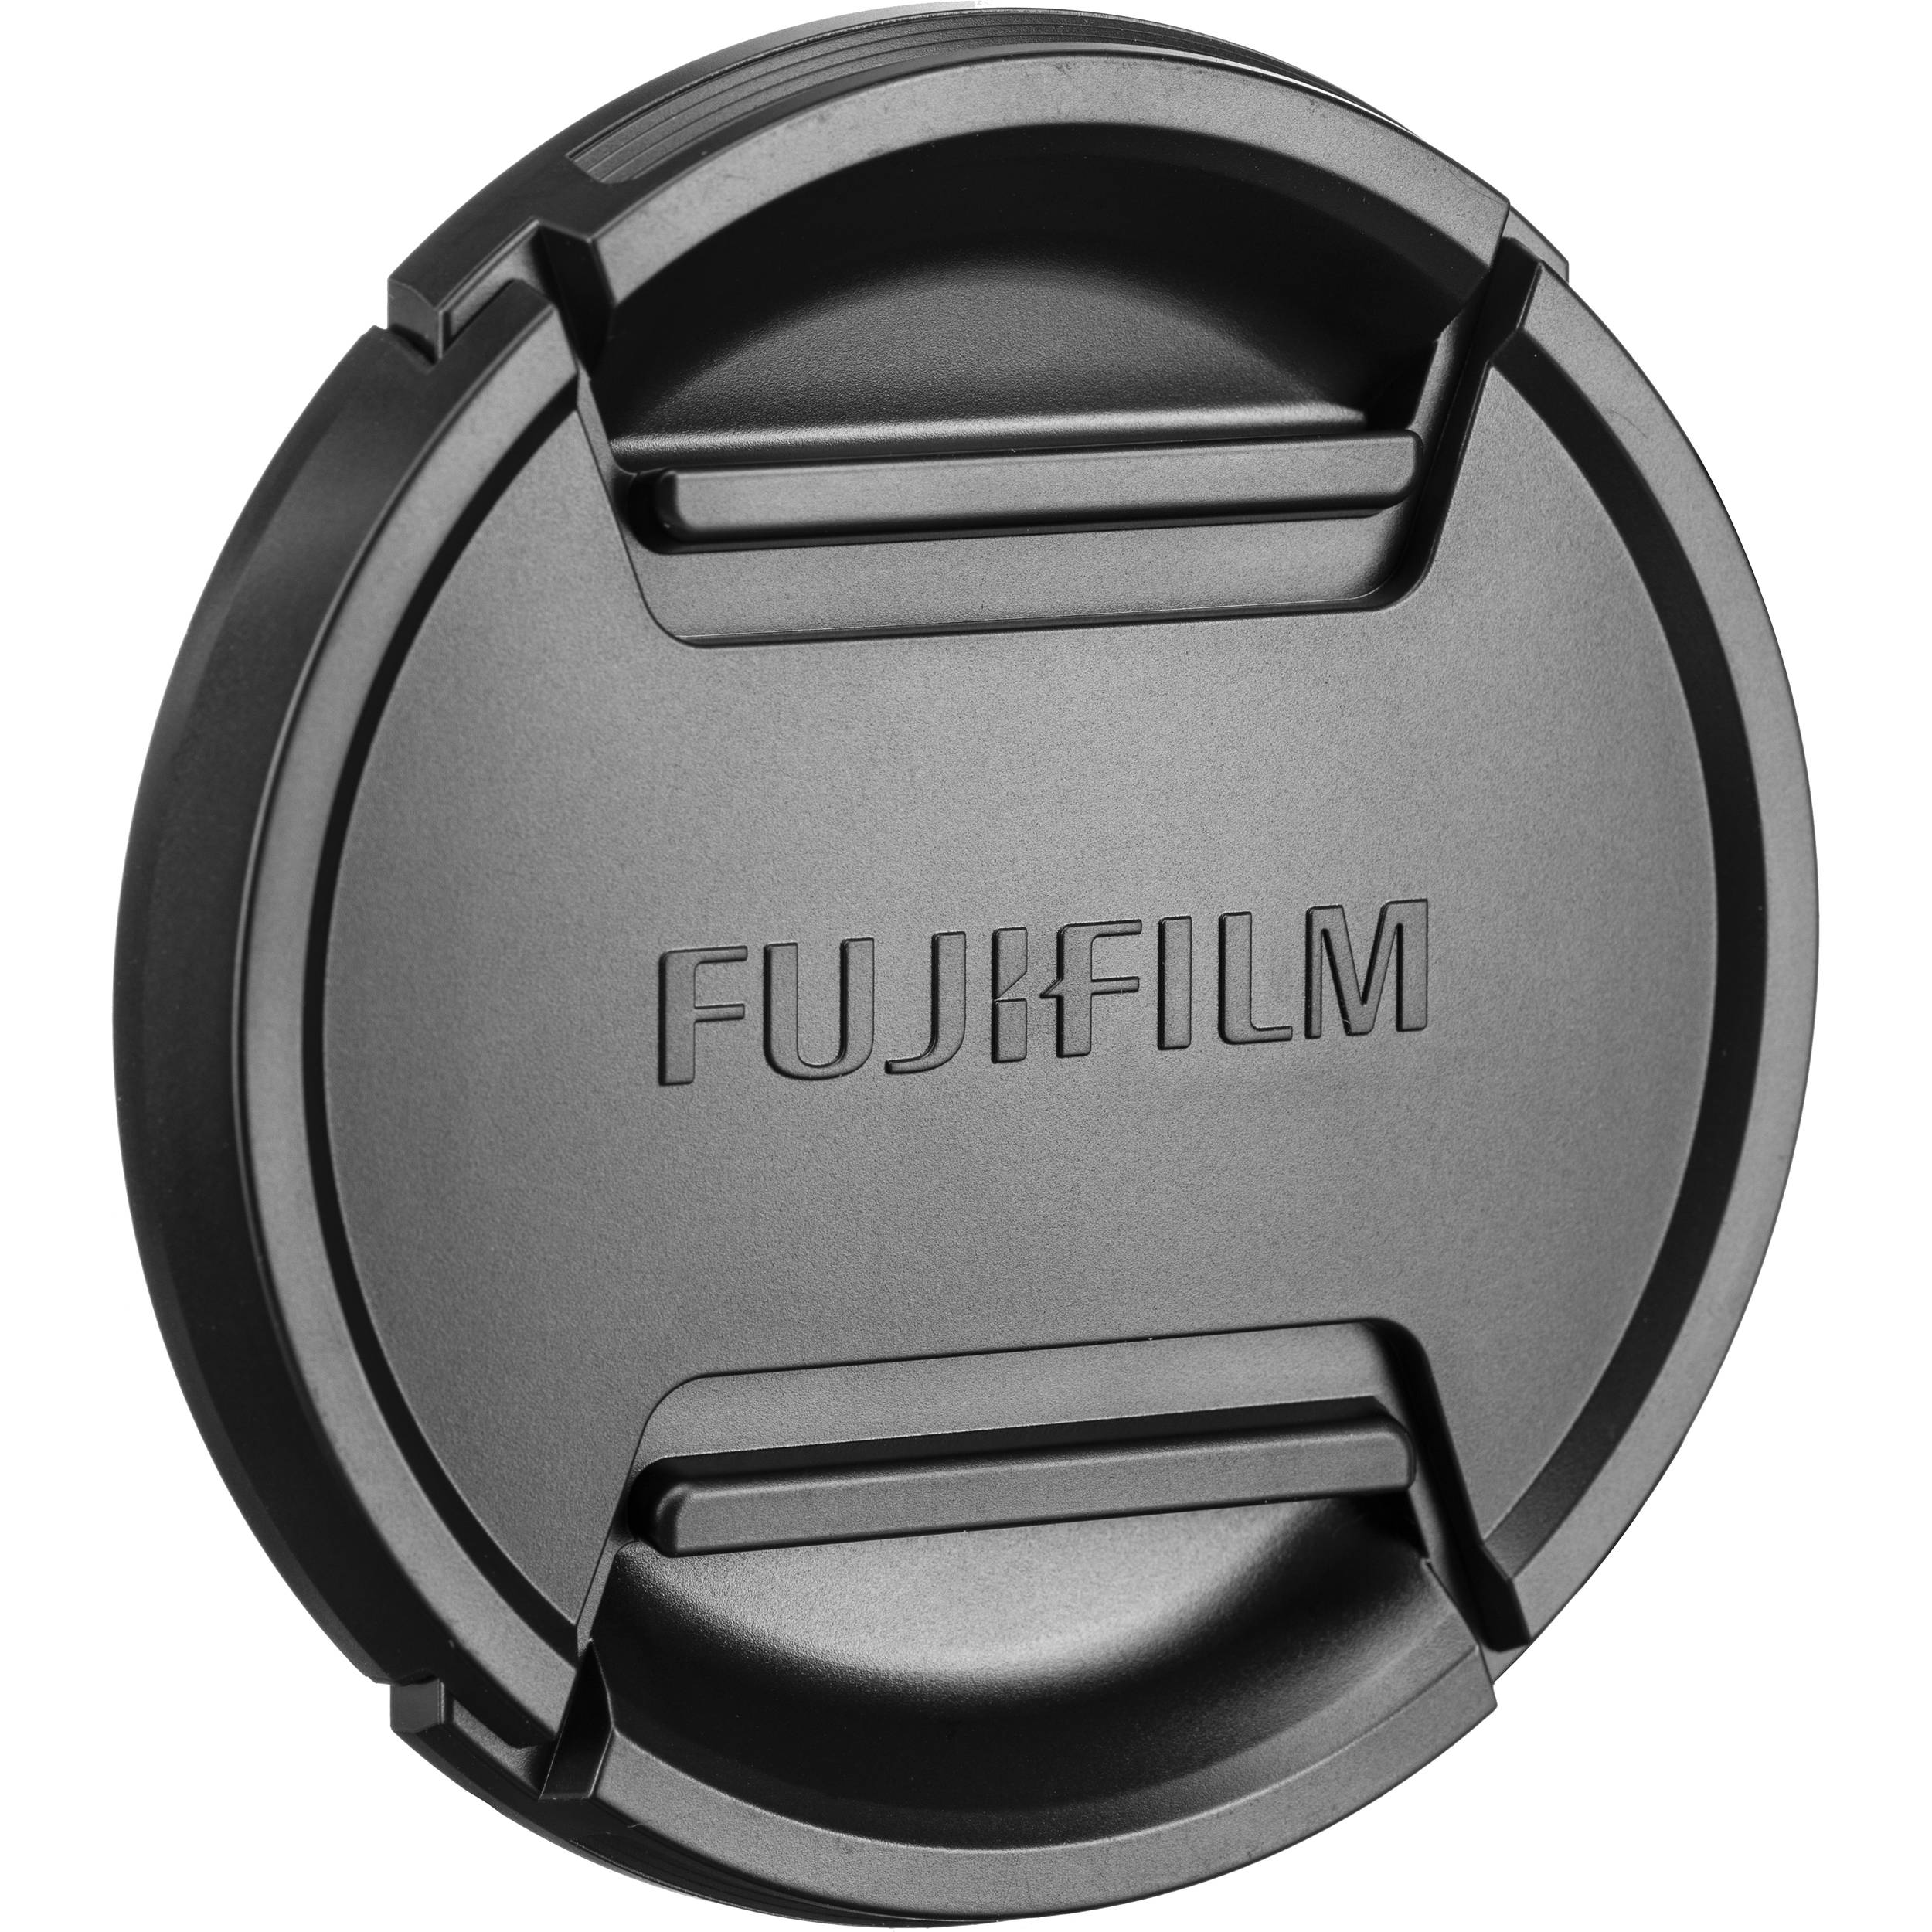 FUJIFILM 72mm Lens Cap II Fujifilm Front Lens Cap